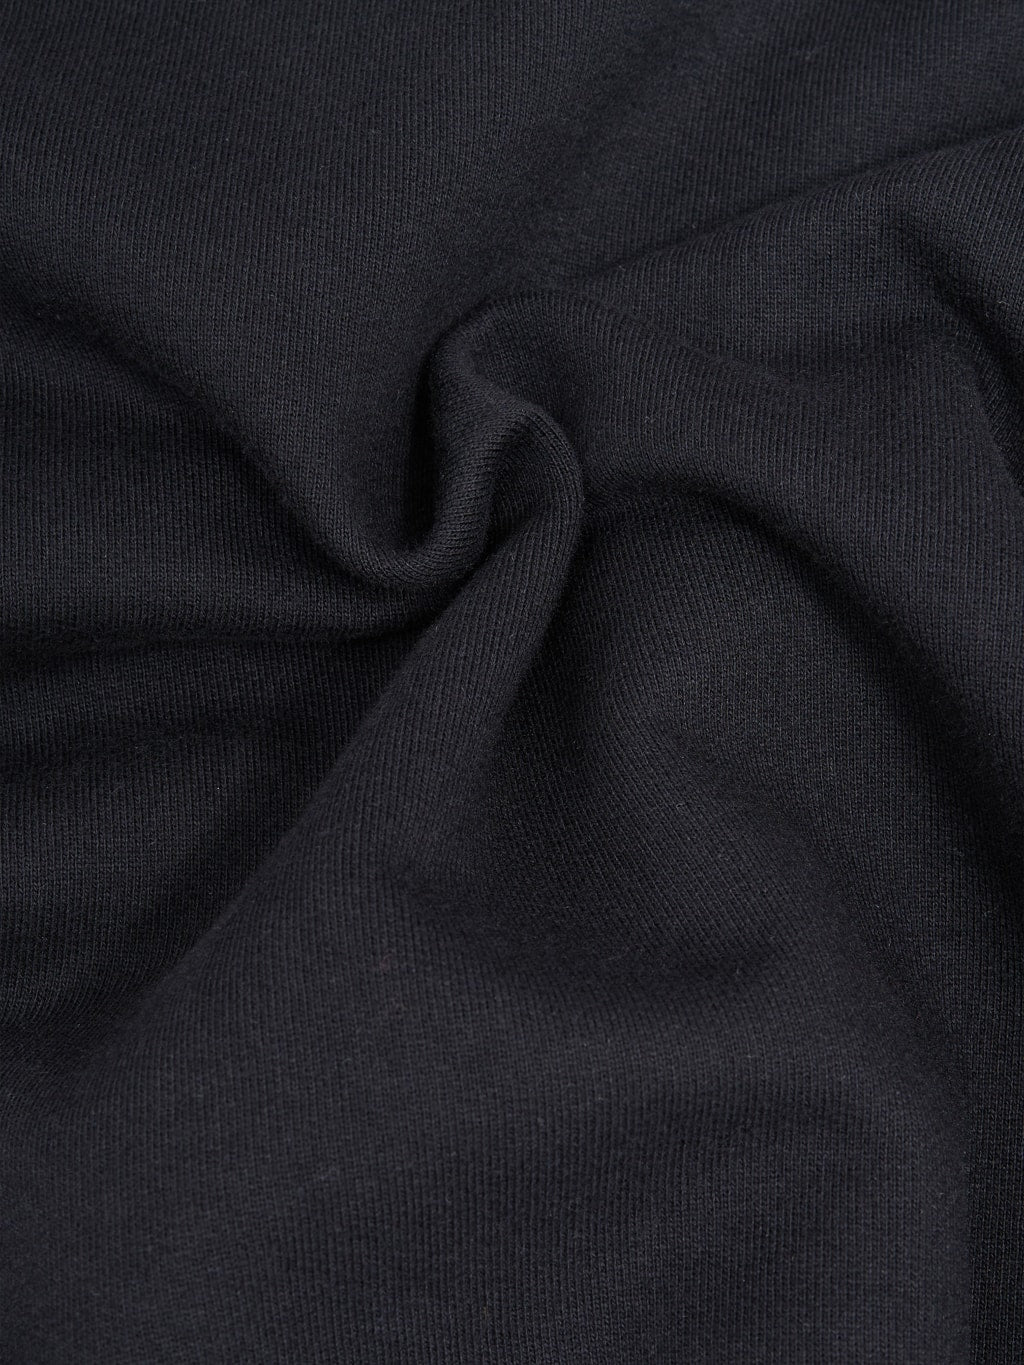 Merz b schwanen loopwheeled hoodie black cotton texture